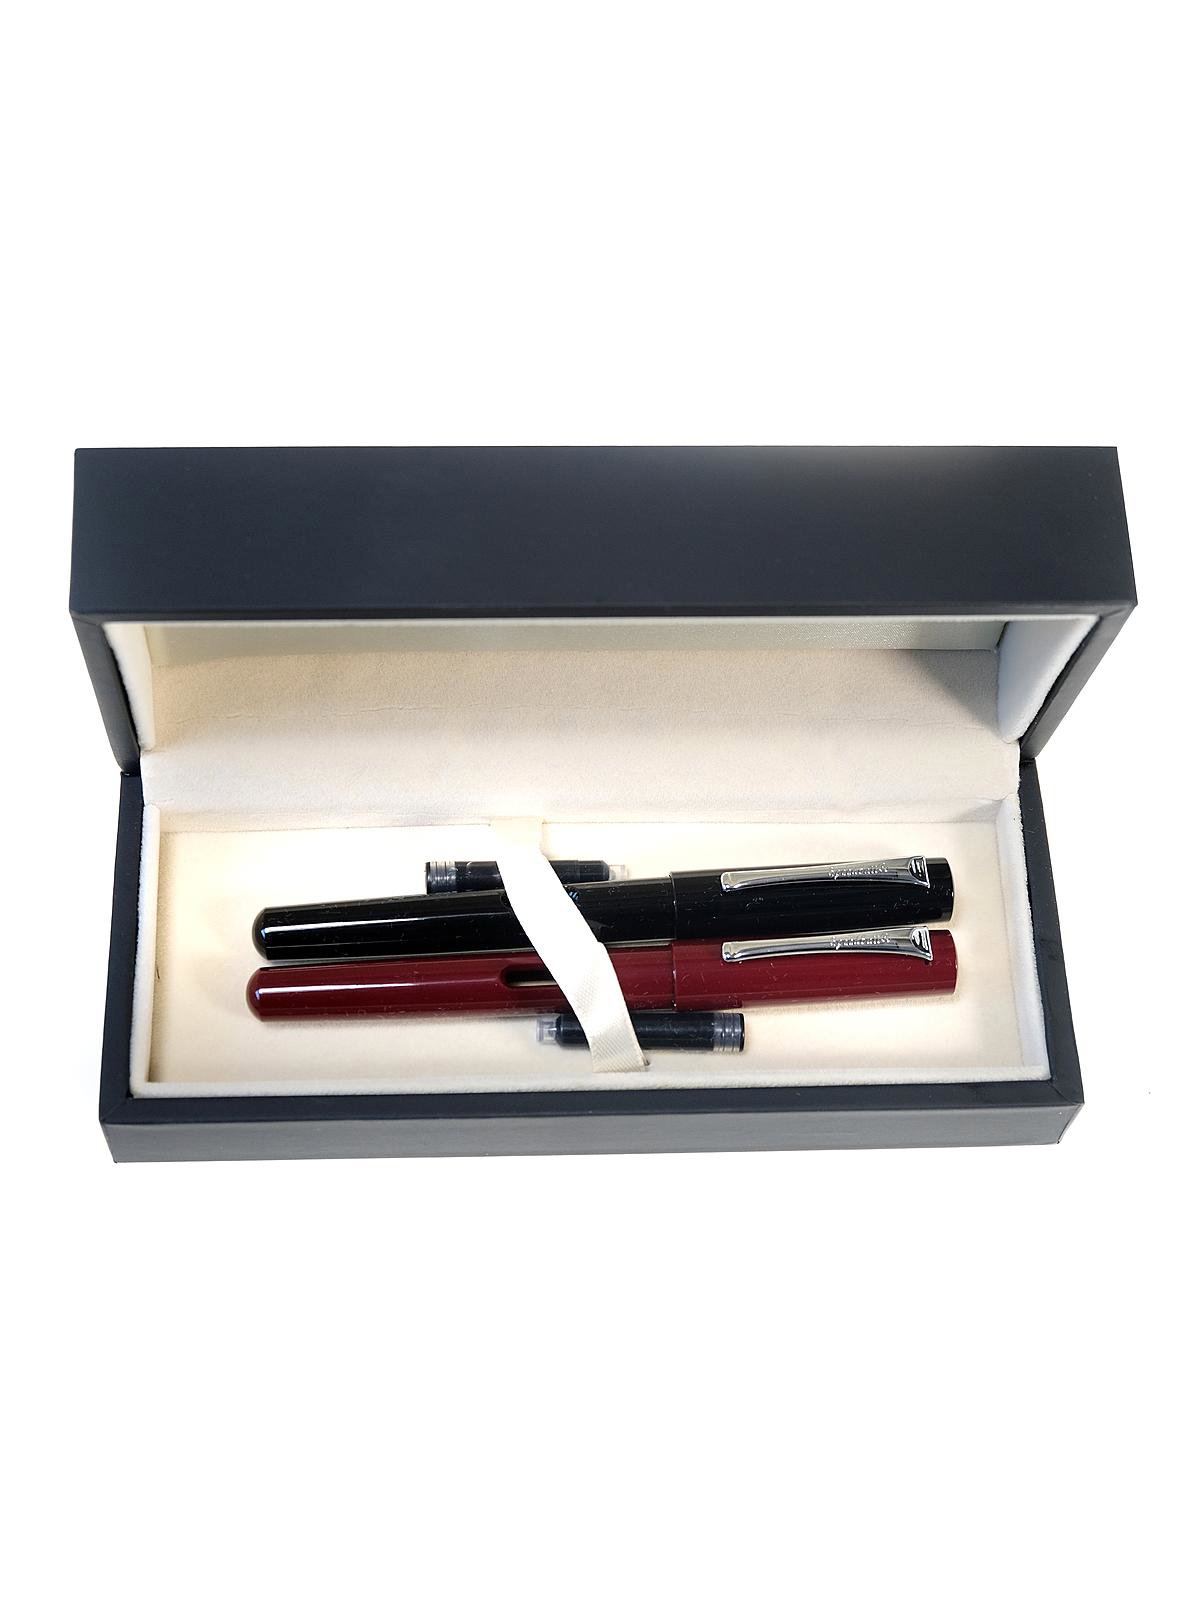 3-day Lead time Metal Rollerball & Ballpoint Pen Gift Set with pen gift box  - PEN GIFT SET I | brainchildusa